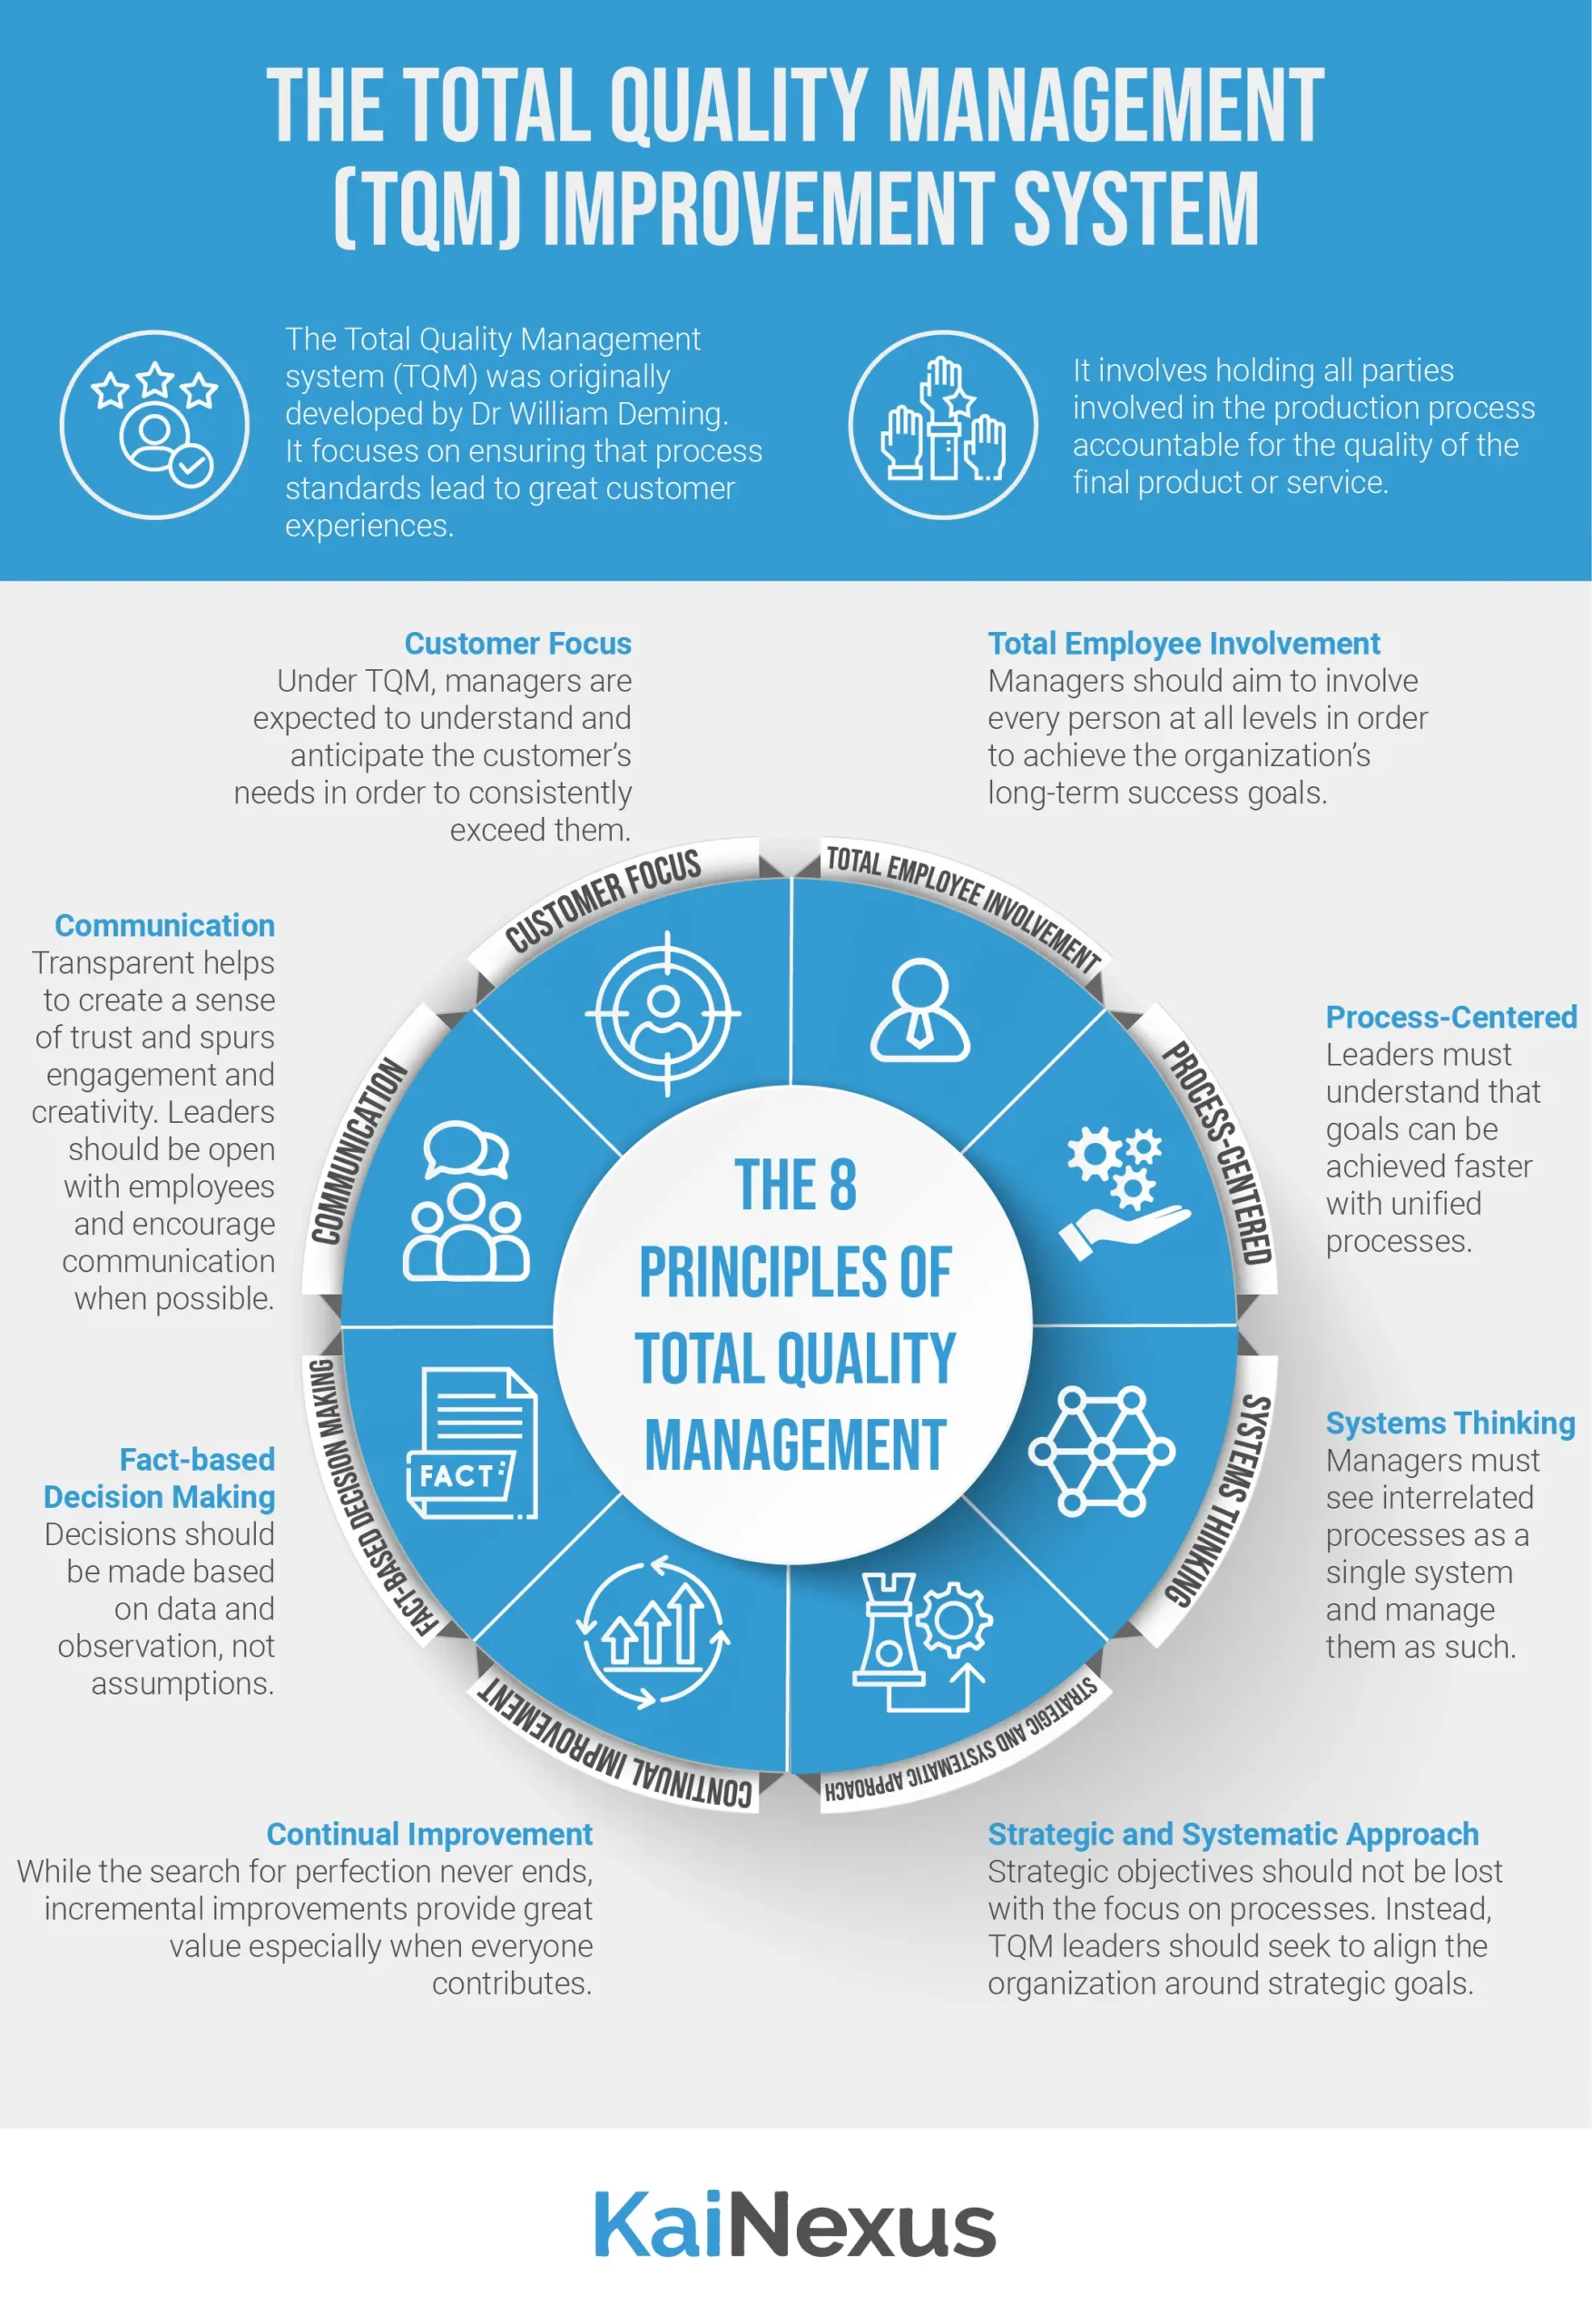 hewlett packard tqm and quality management - What is TQM in quality management